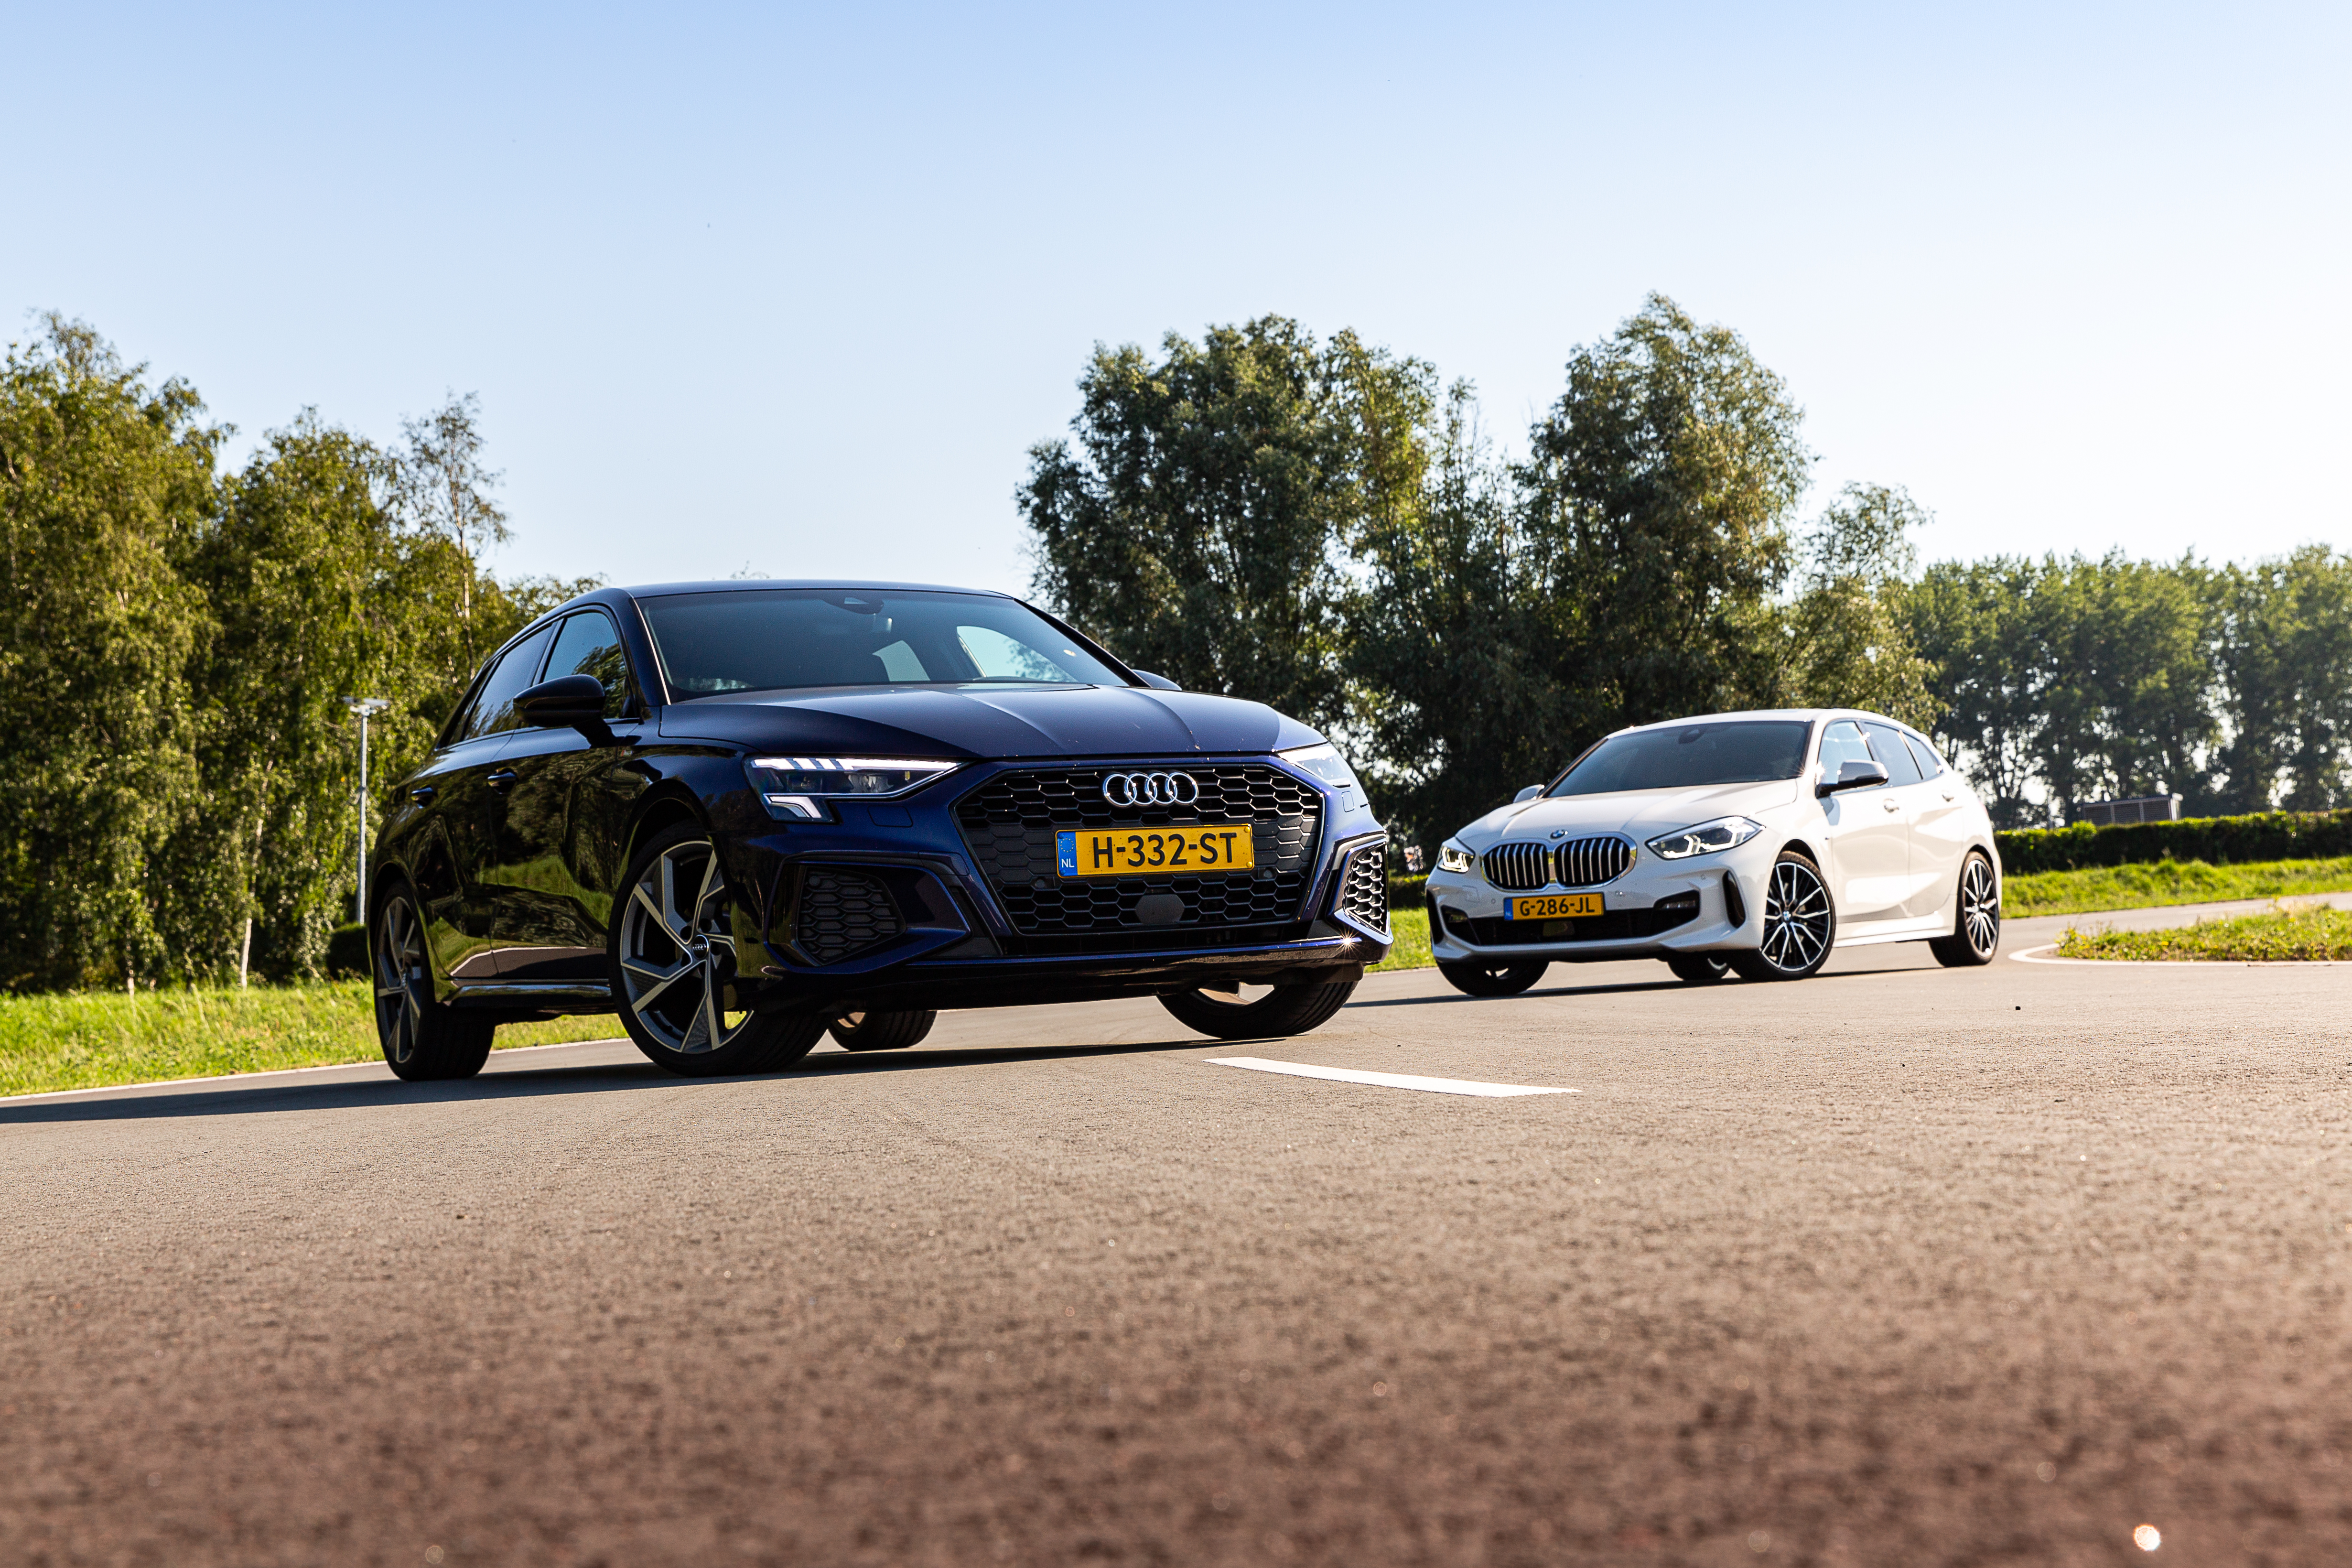 Overtuiging omringen Collega Autovisie dubbeltest: Audi A3 Sportback vs. BMW 1-Serie